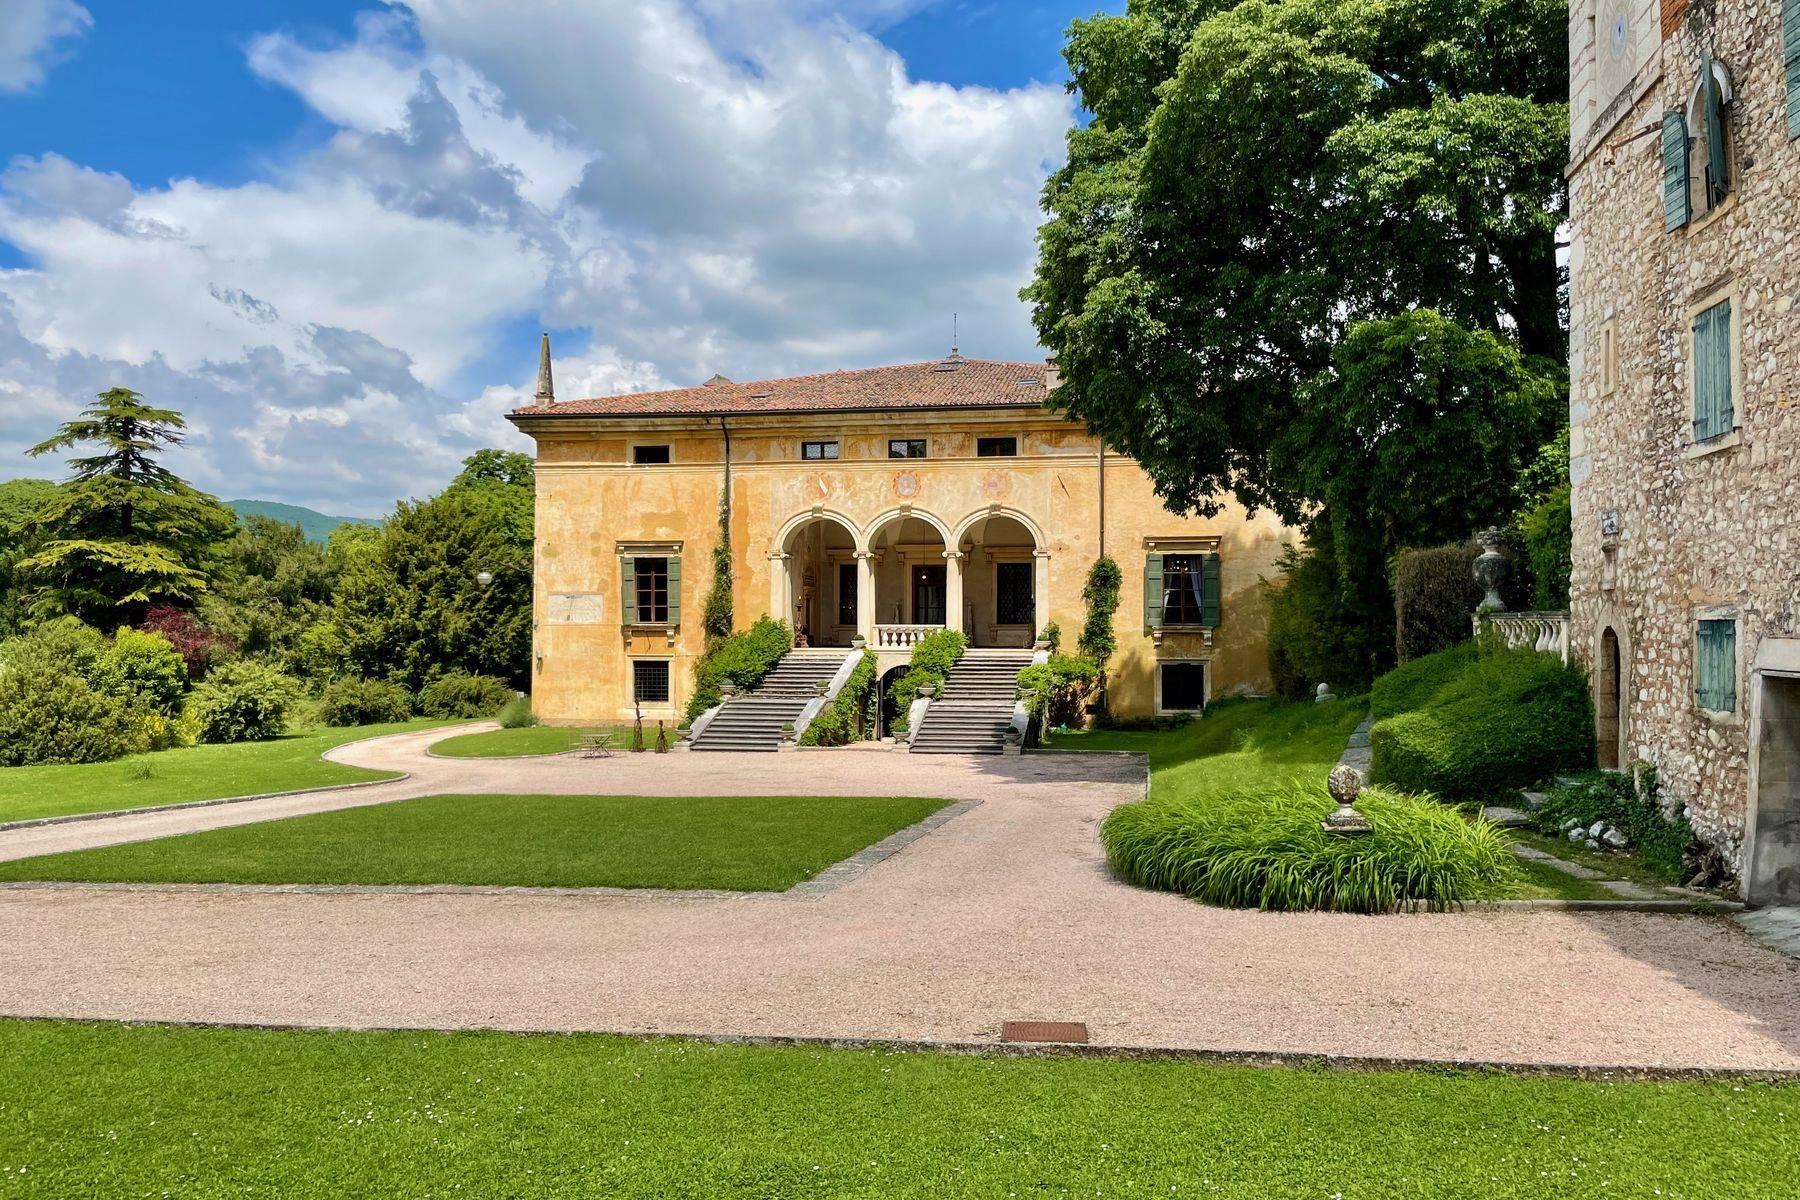 Fascinating Venetian villa just a few kilometers from Verona - 45